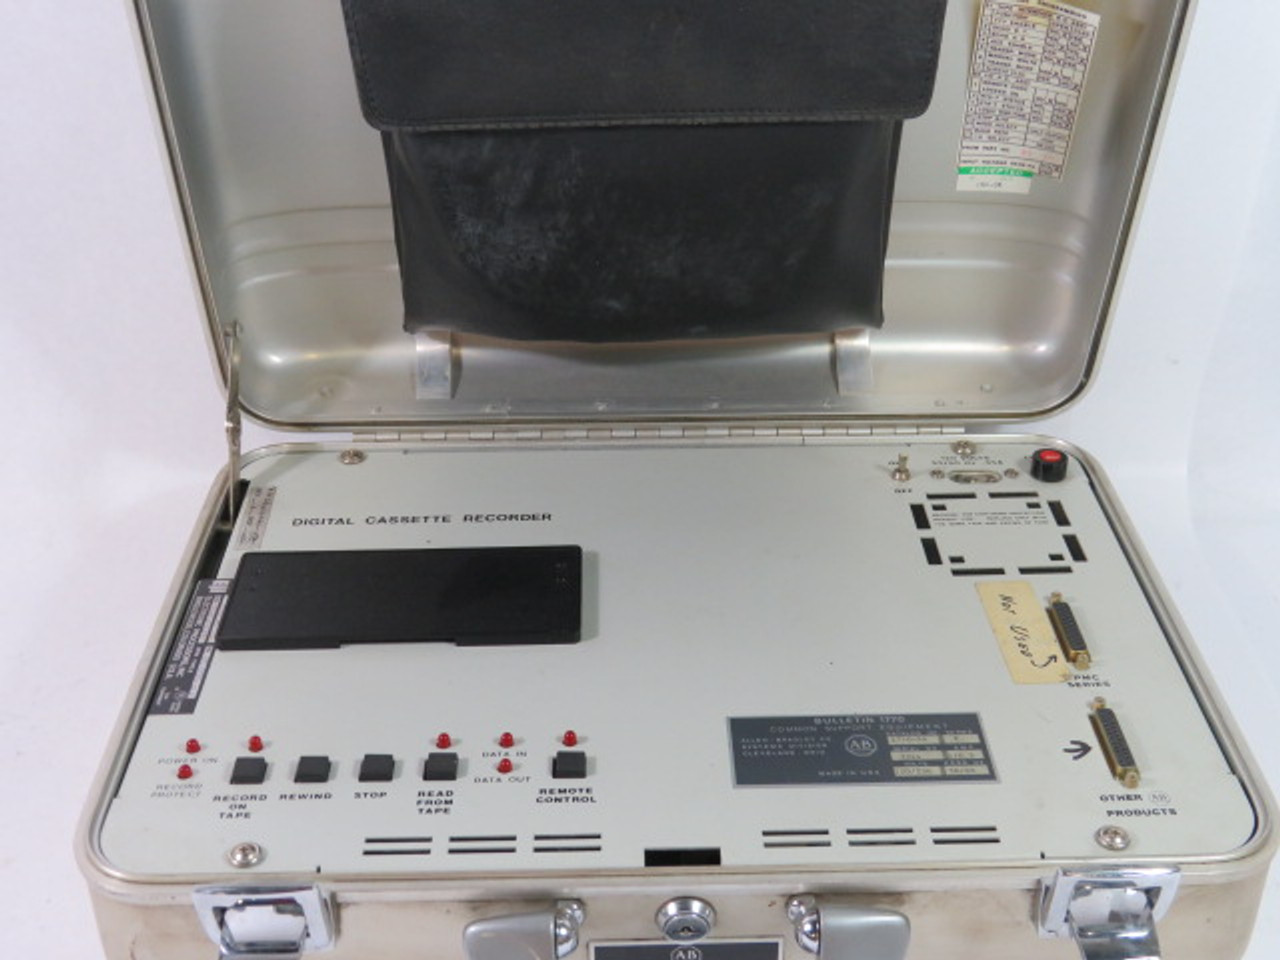 Allen-Bradley Ser B Digital Cassette Recorder 120/230V 1/0.5A 50/60Hz USED